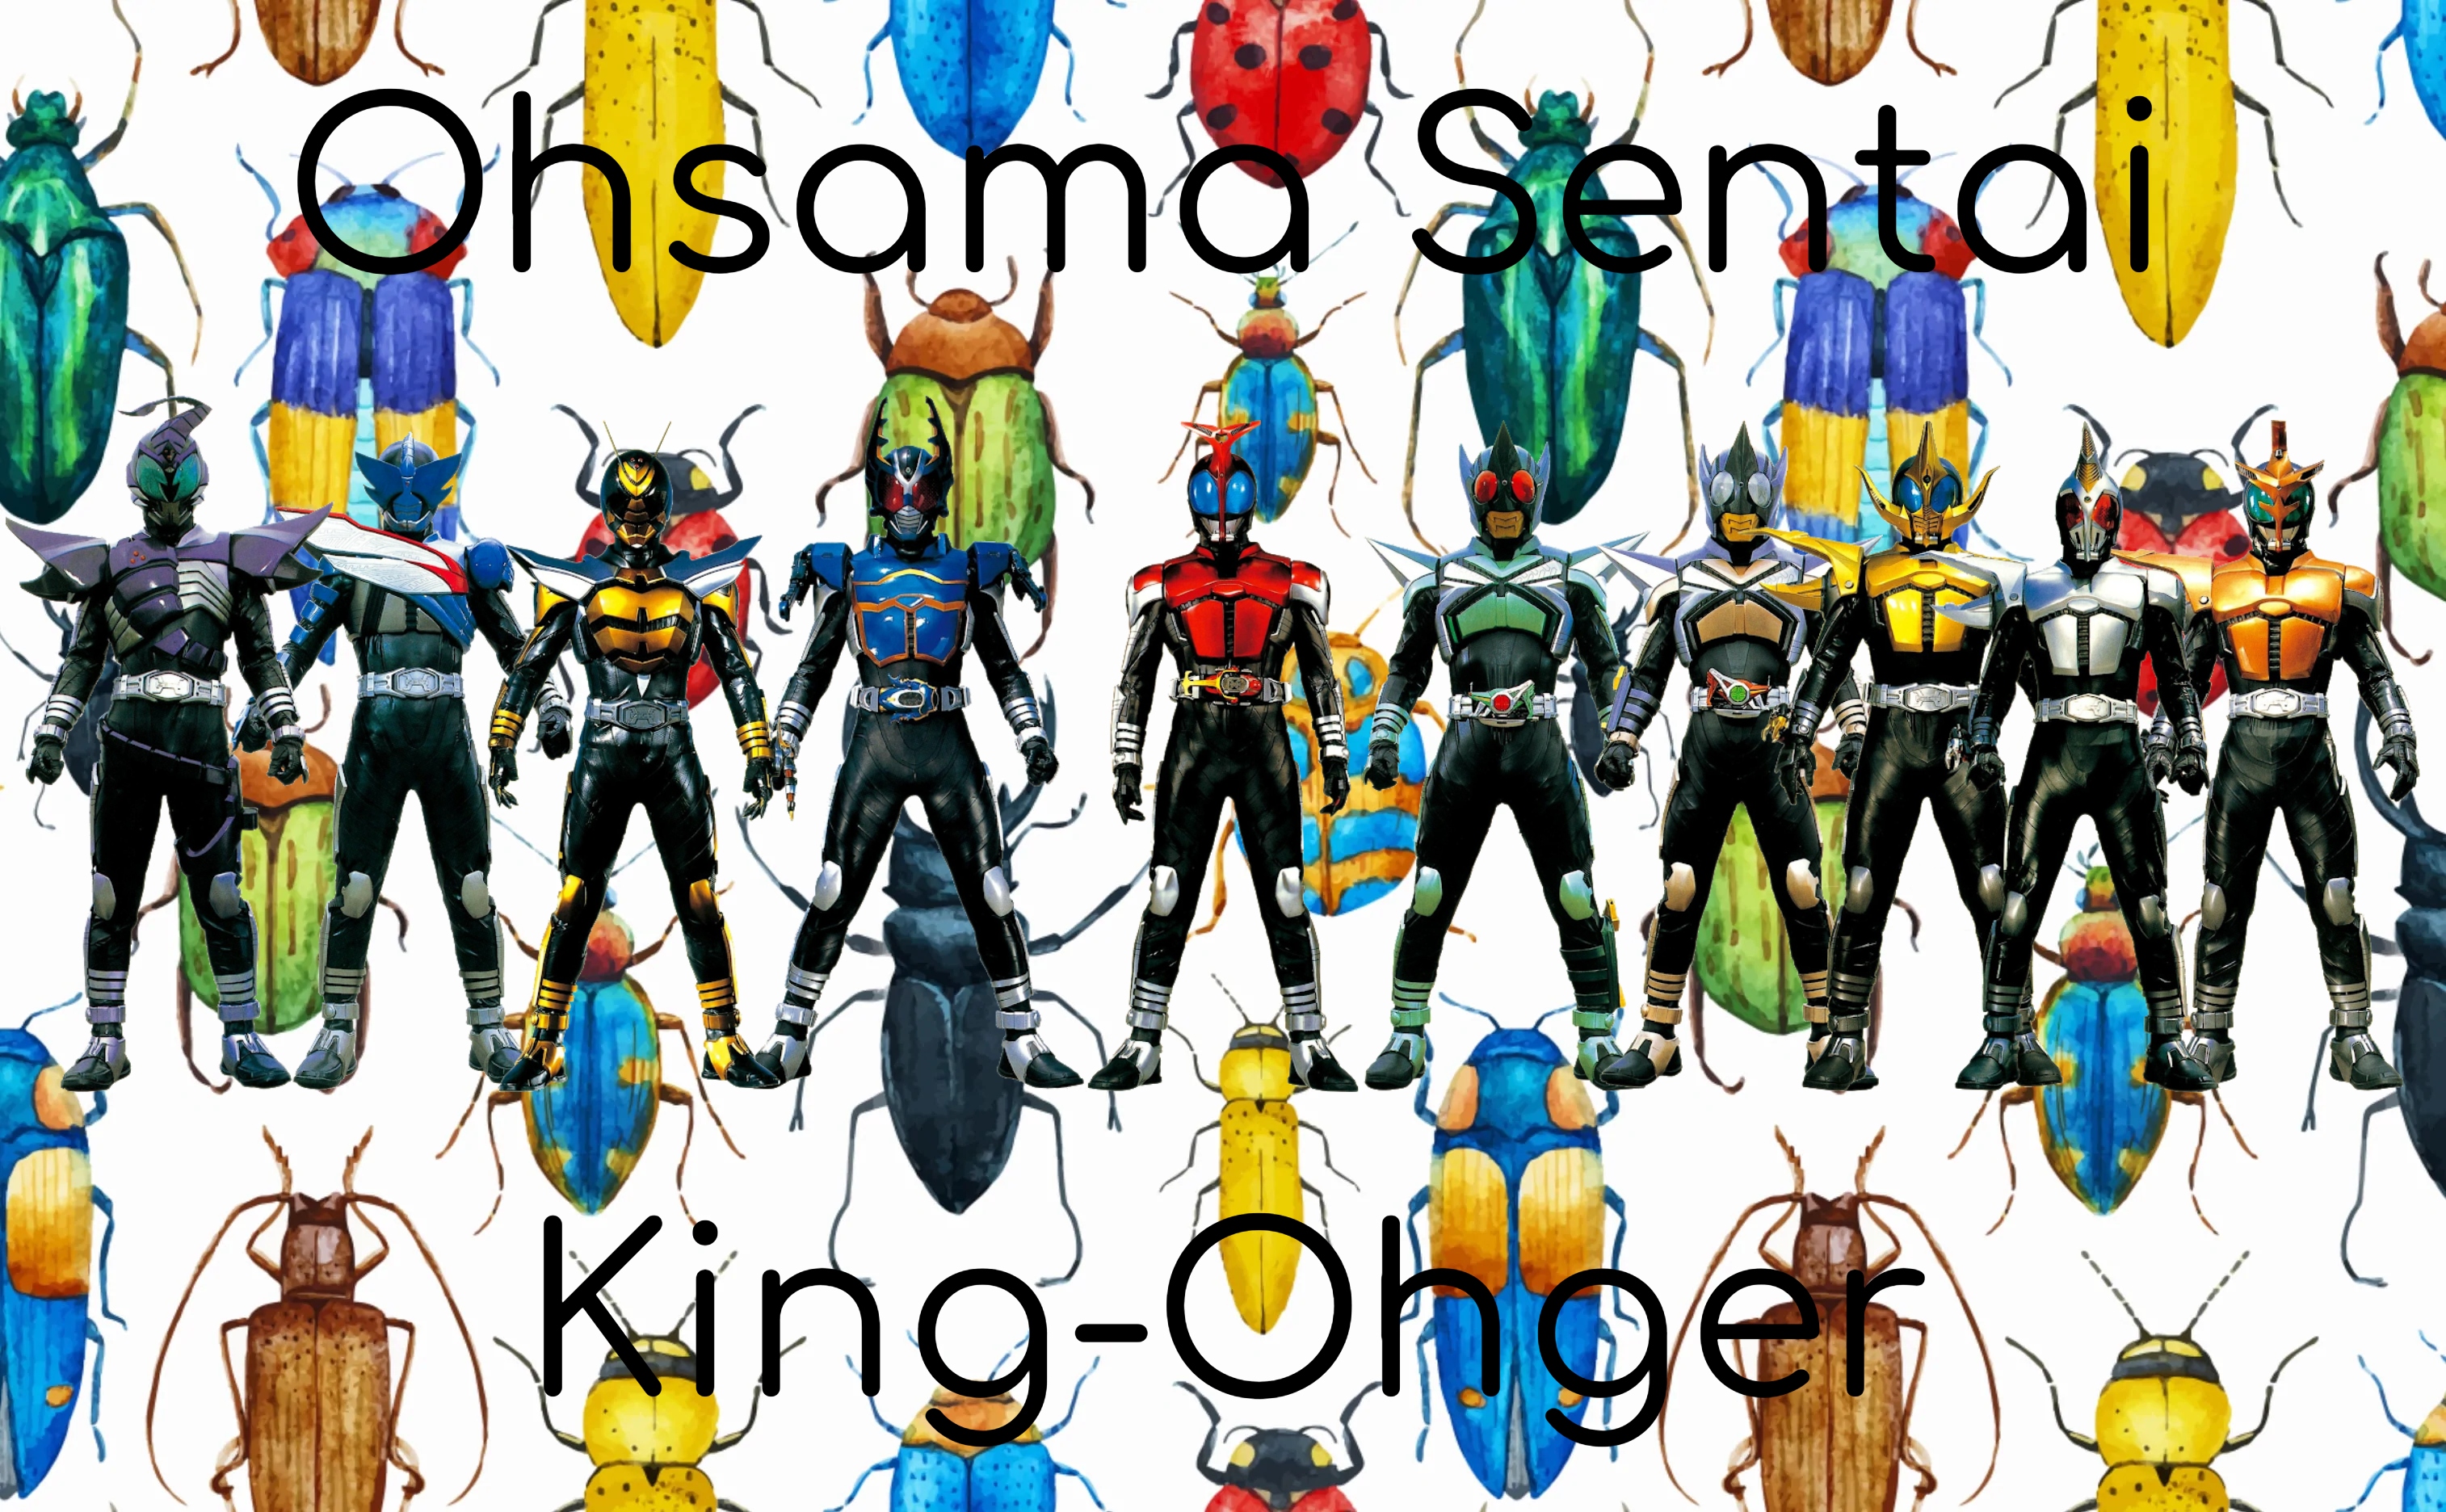 I Think KingOhger will look like Riders from Kamen Rider Kabuto Fandom